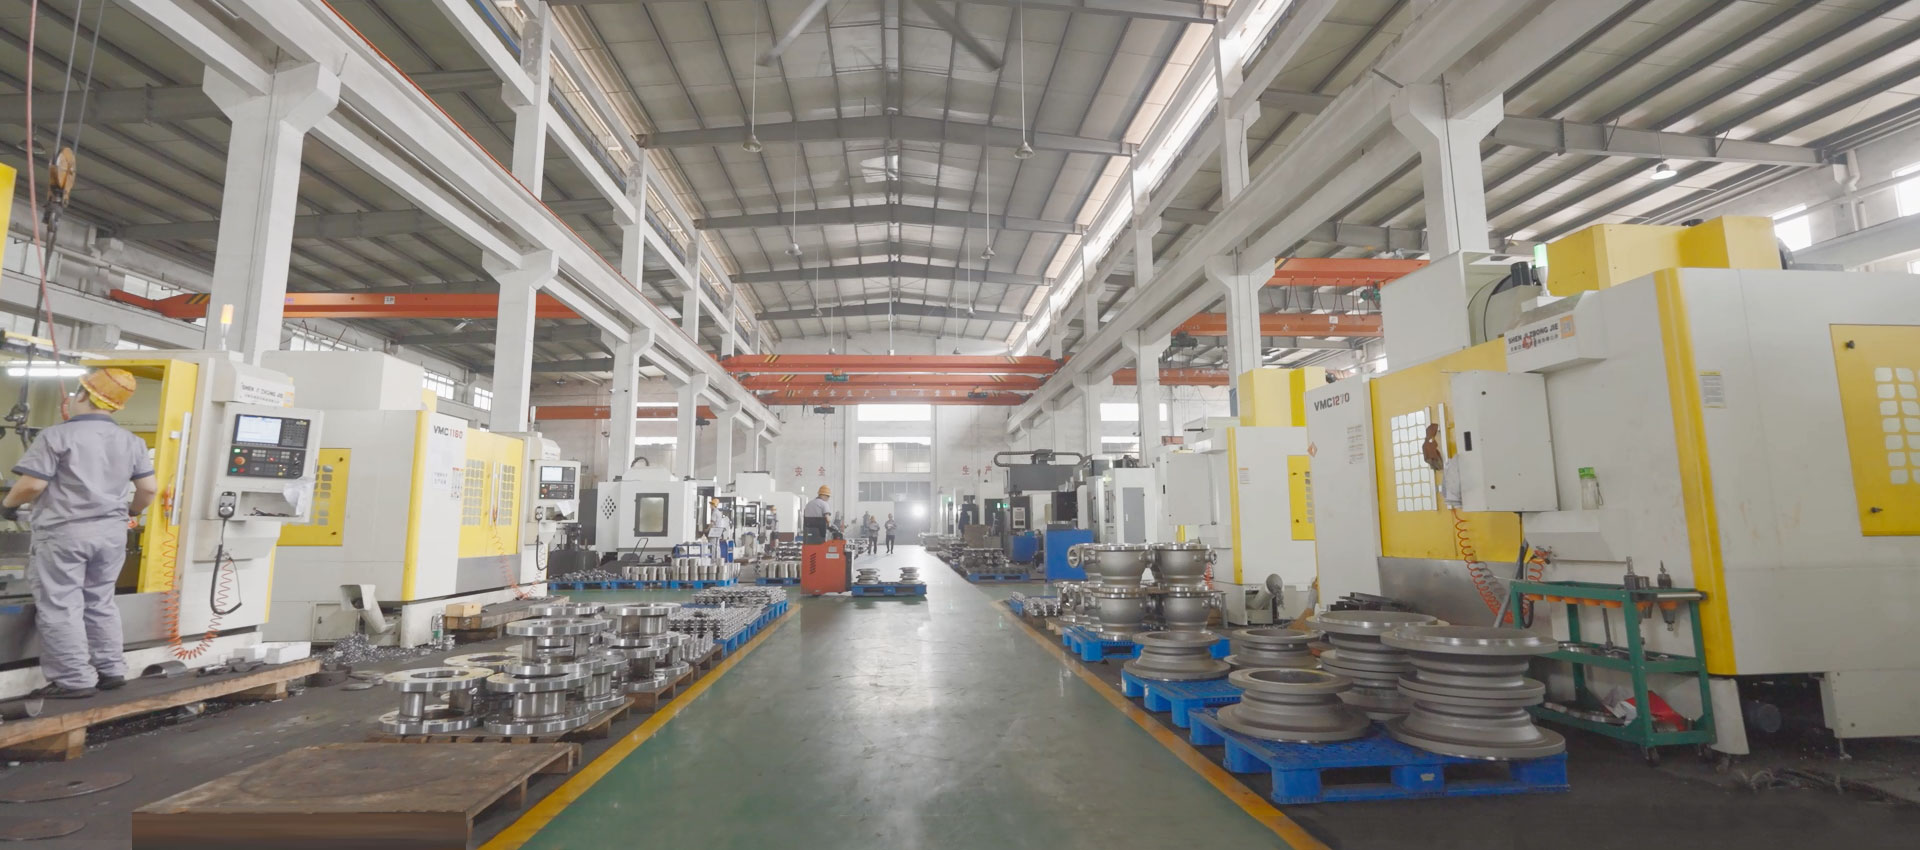 ژجیانگ Liangyi Valve Co., Ltd Factory